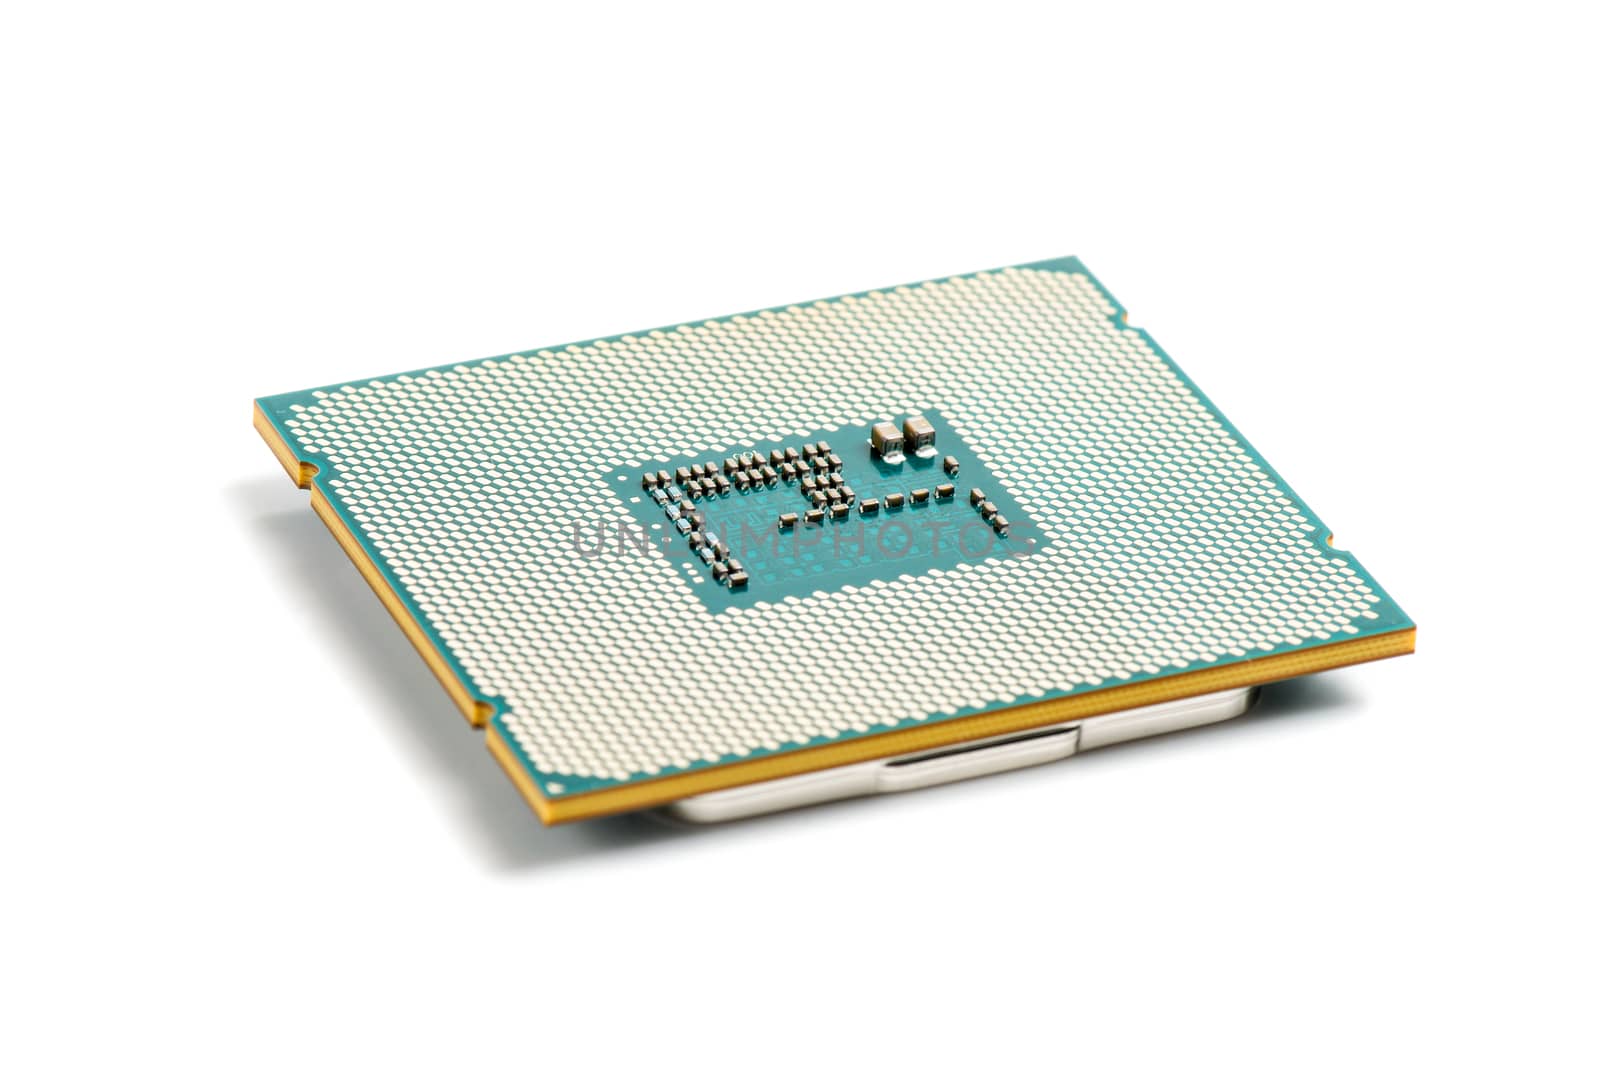 Computer processor CPU on white background